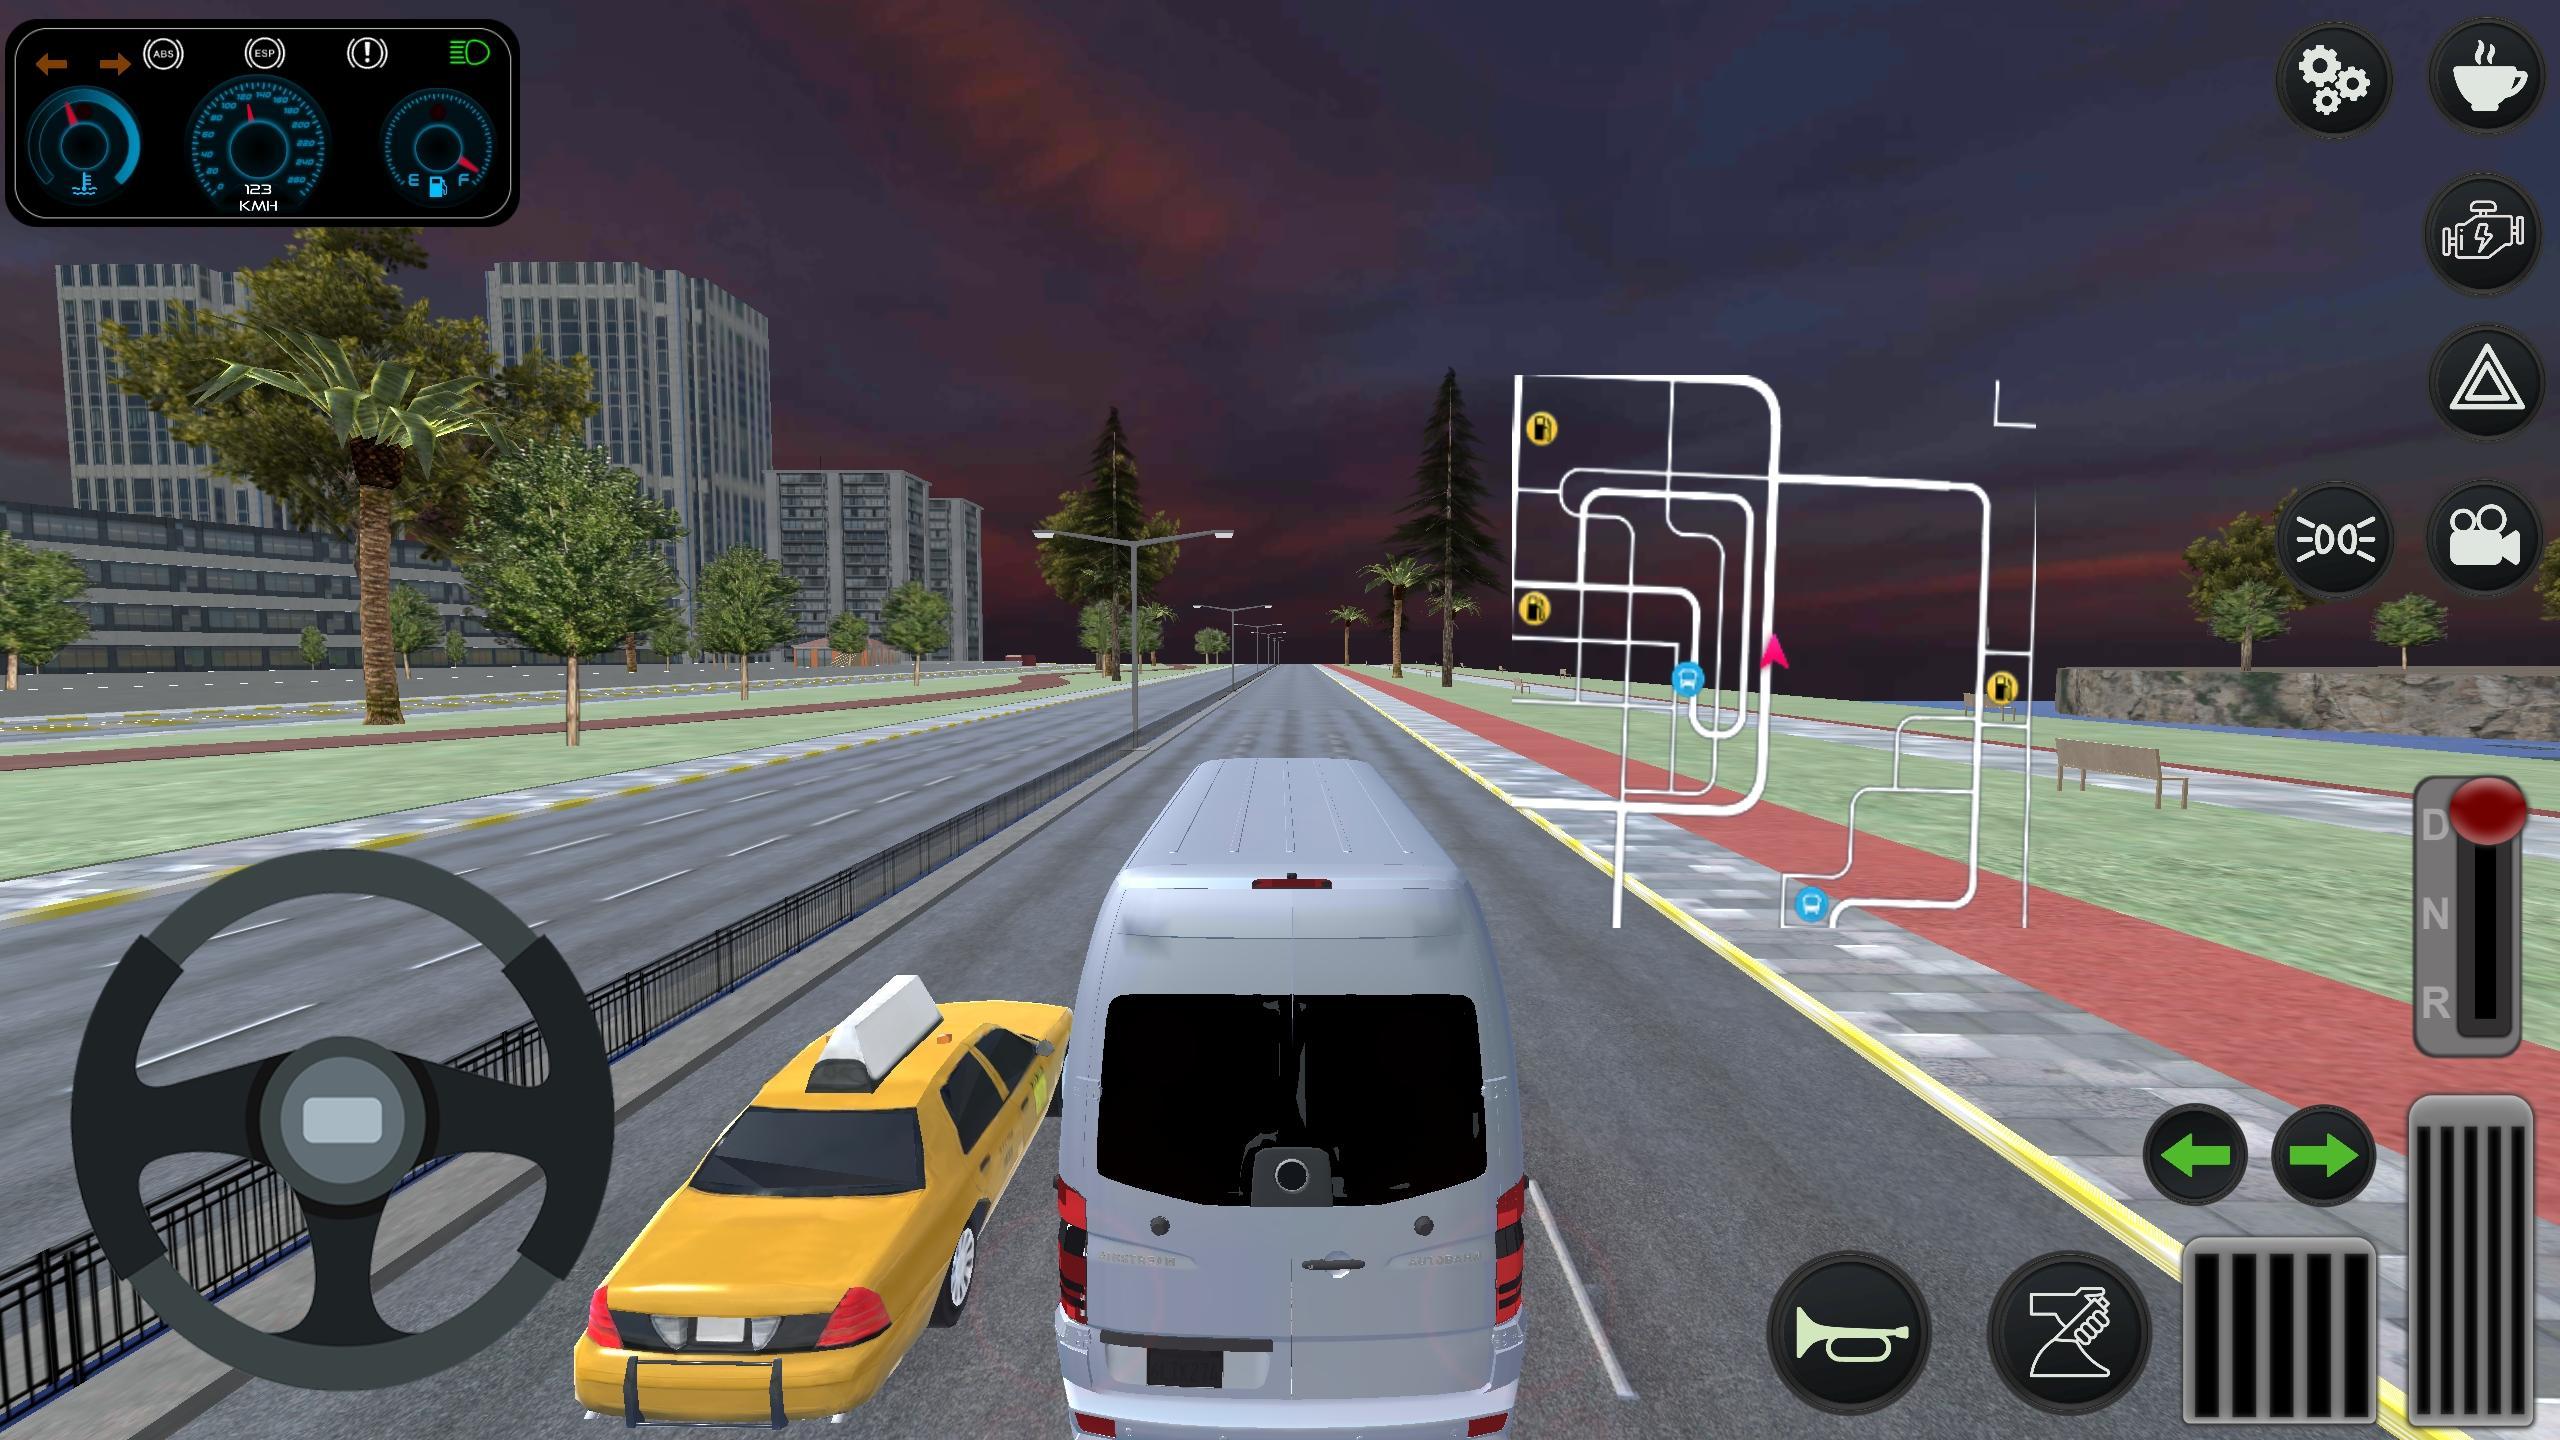 Minibus City Travel Simulator For Android Apk Download